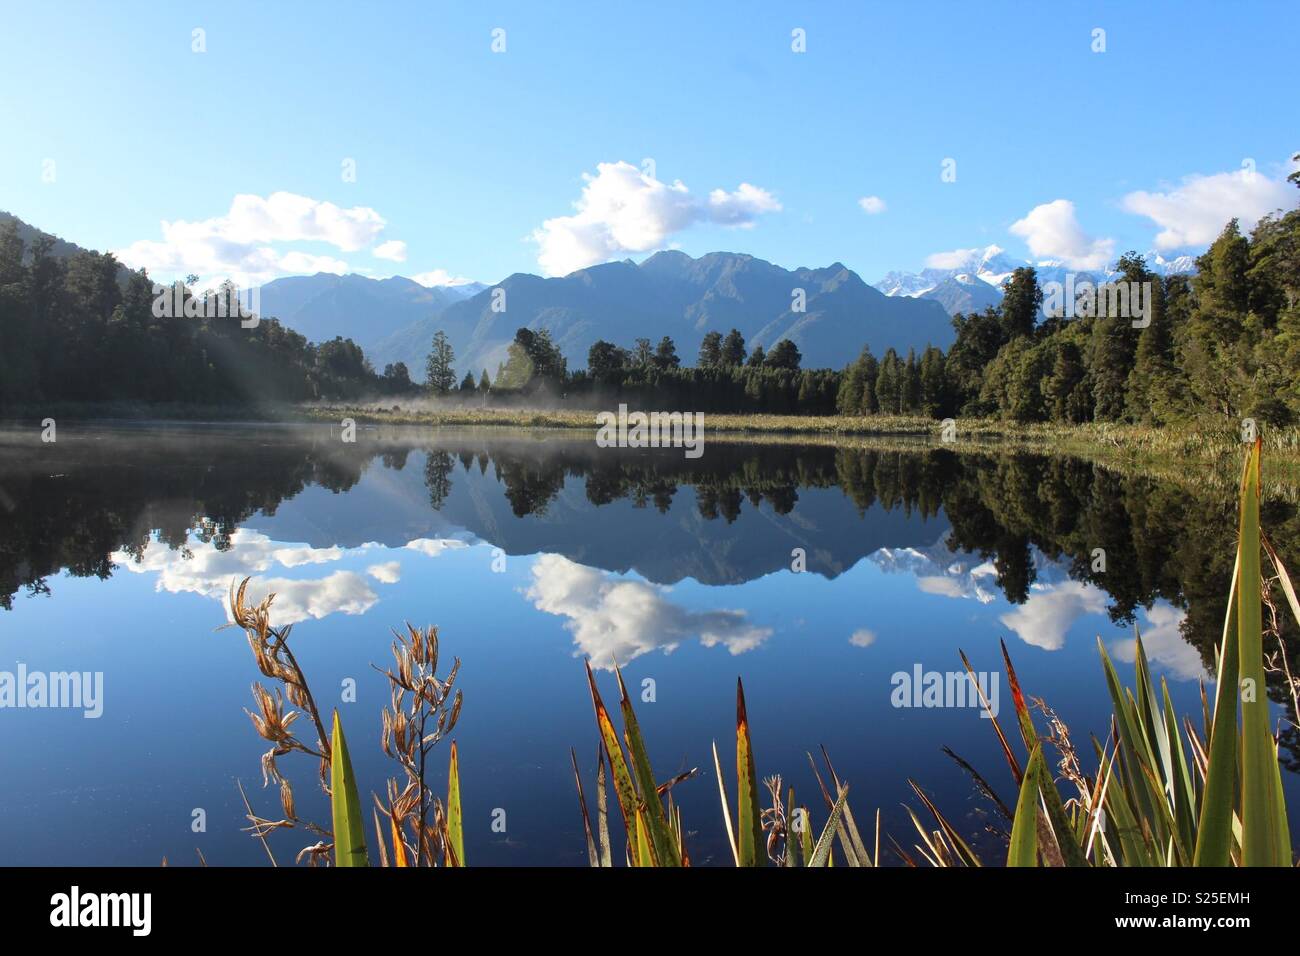 Reflection on a lake Stock Photo